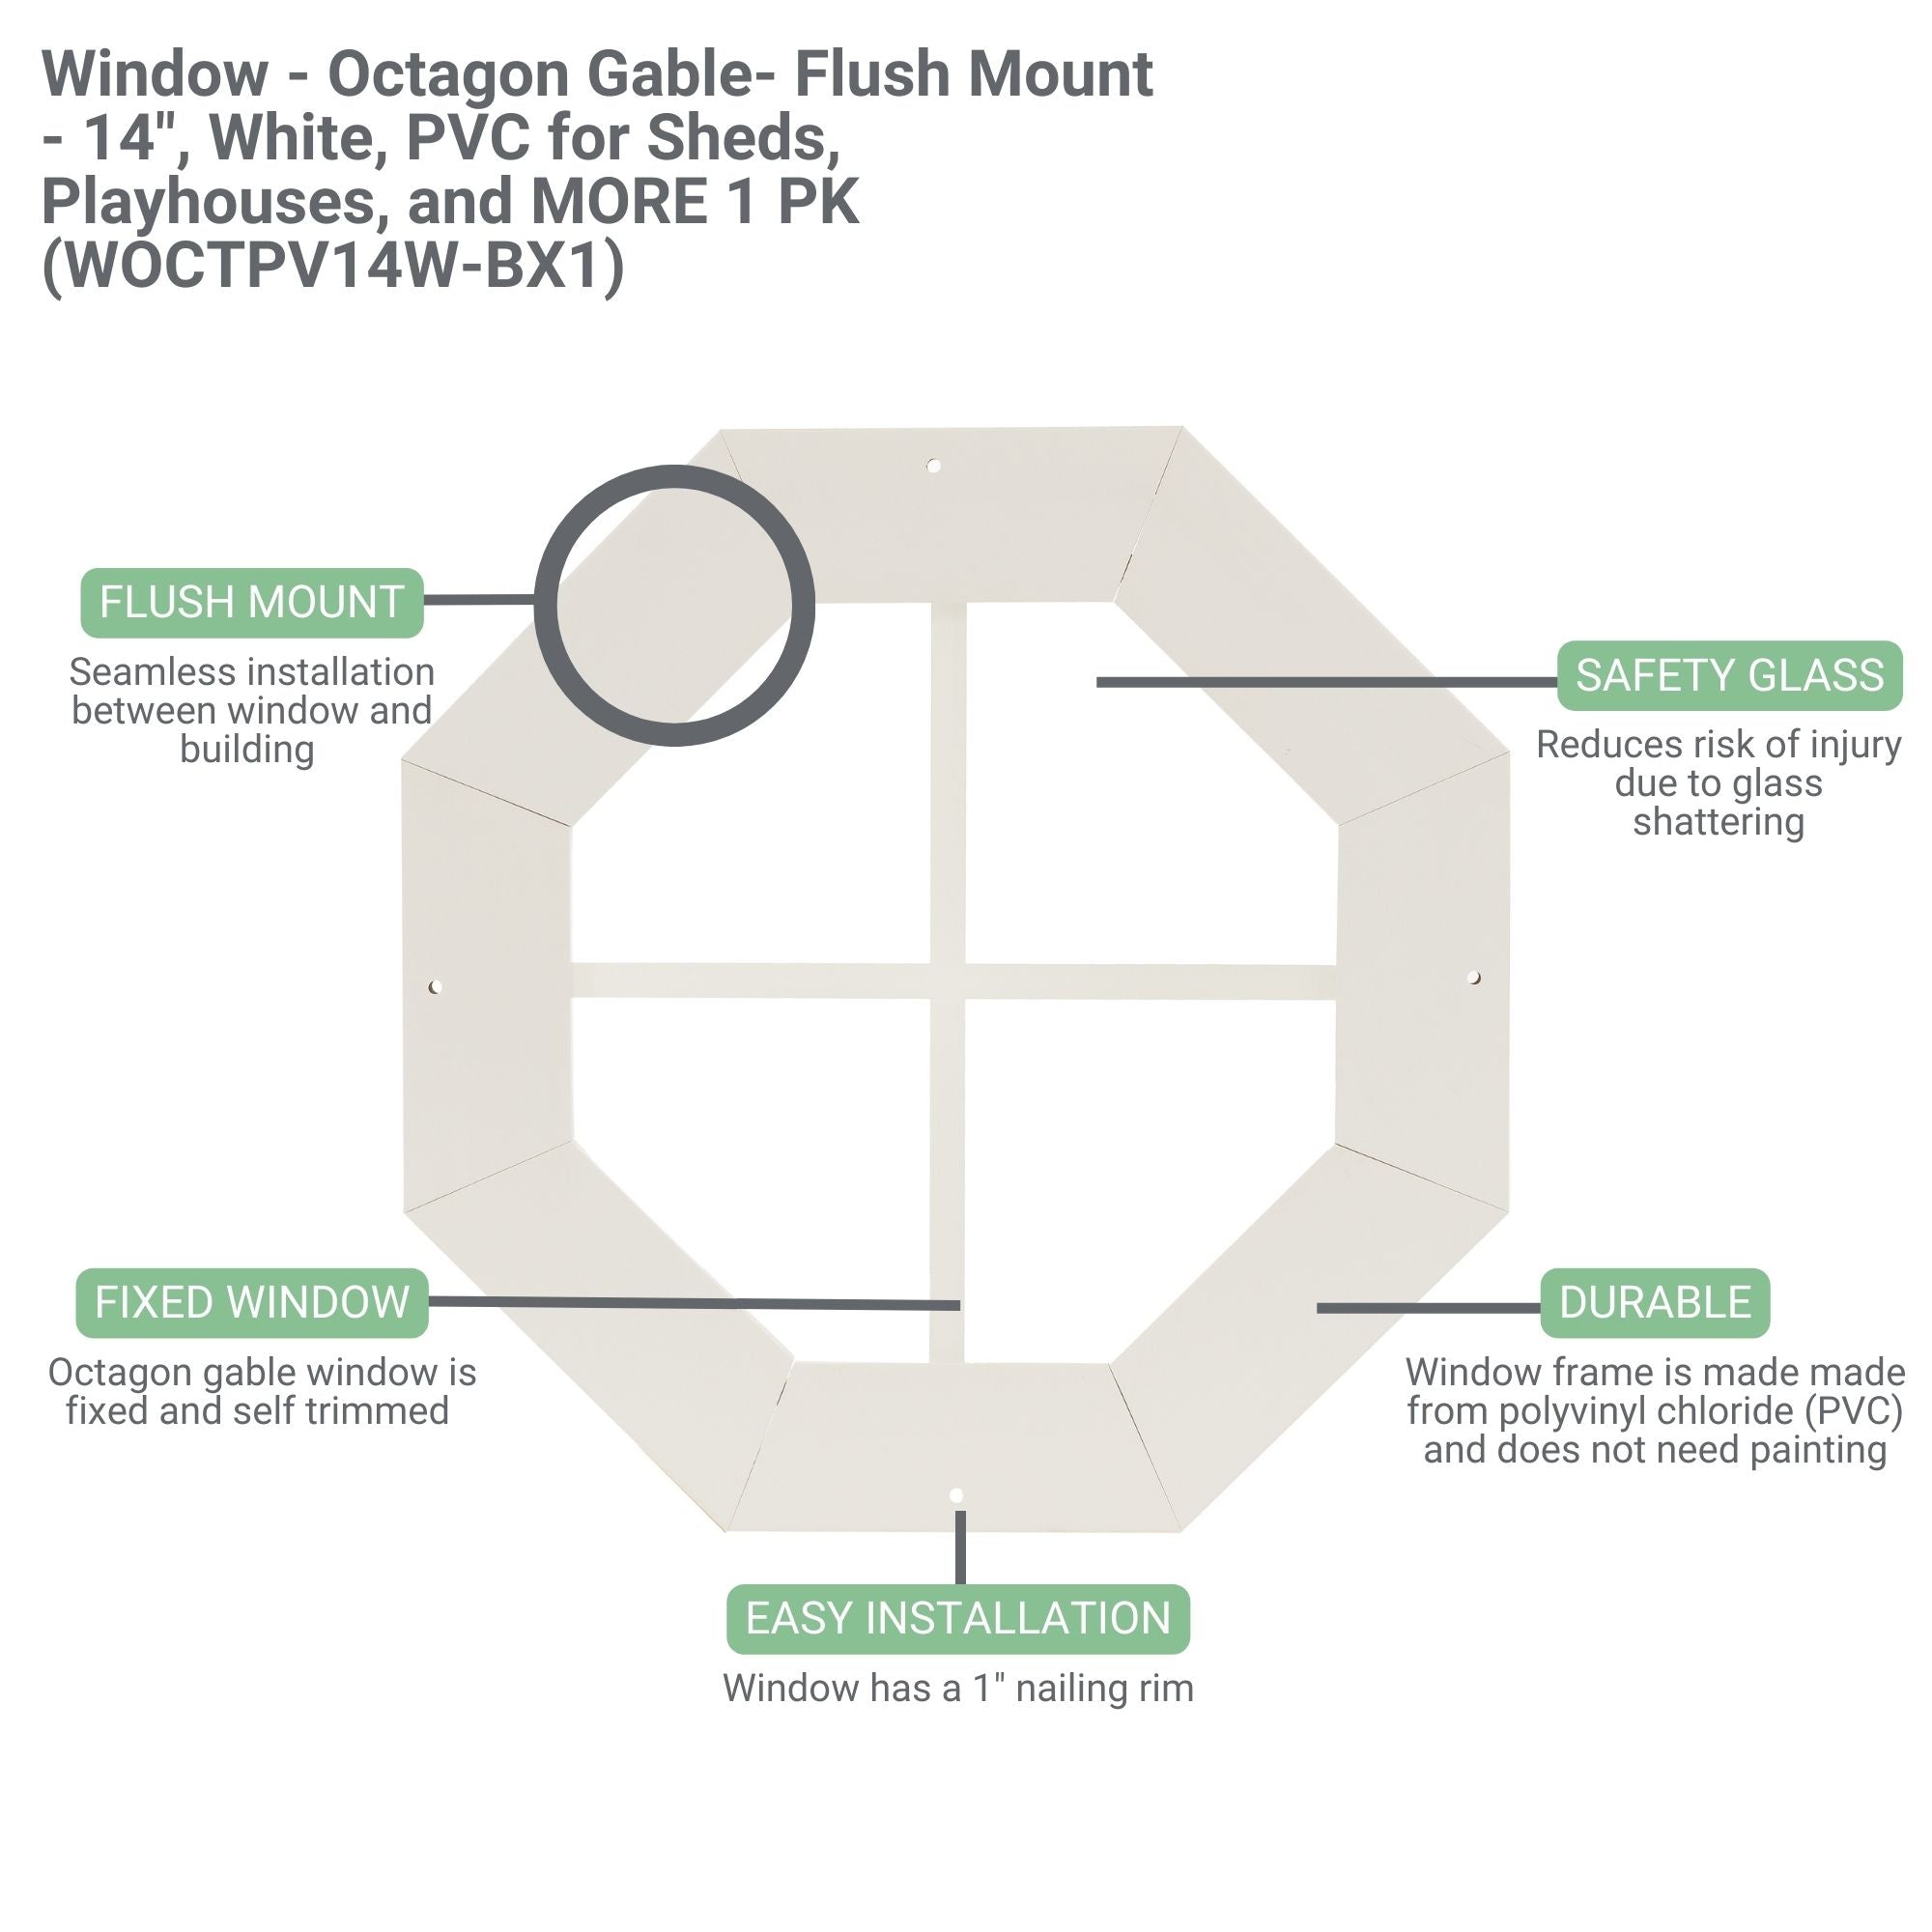 14" Octagon Gable Flush Mount Shed Window, PVC